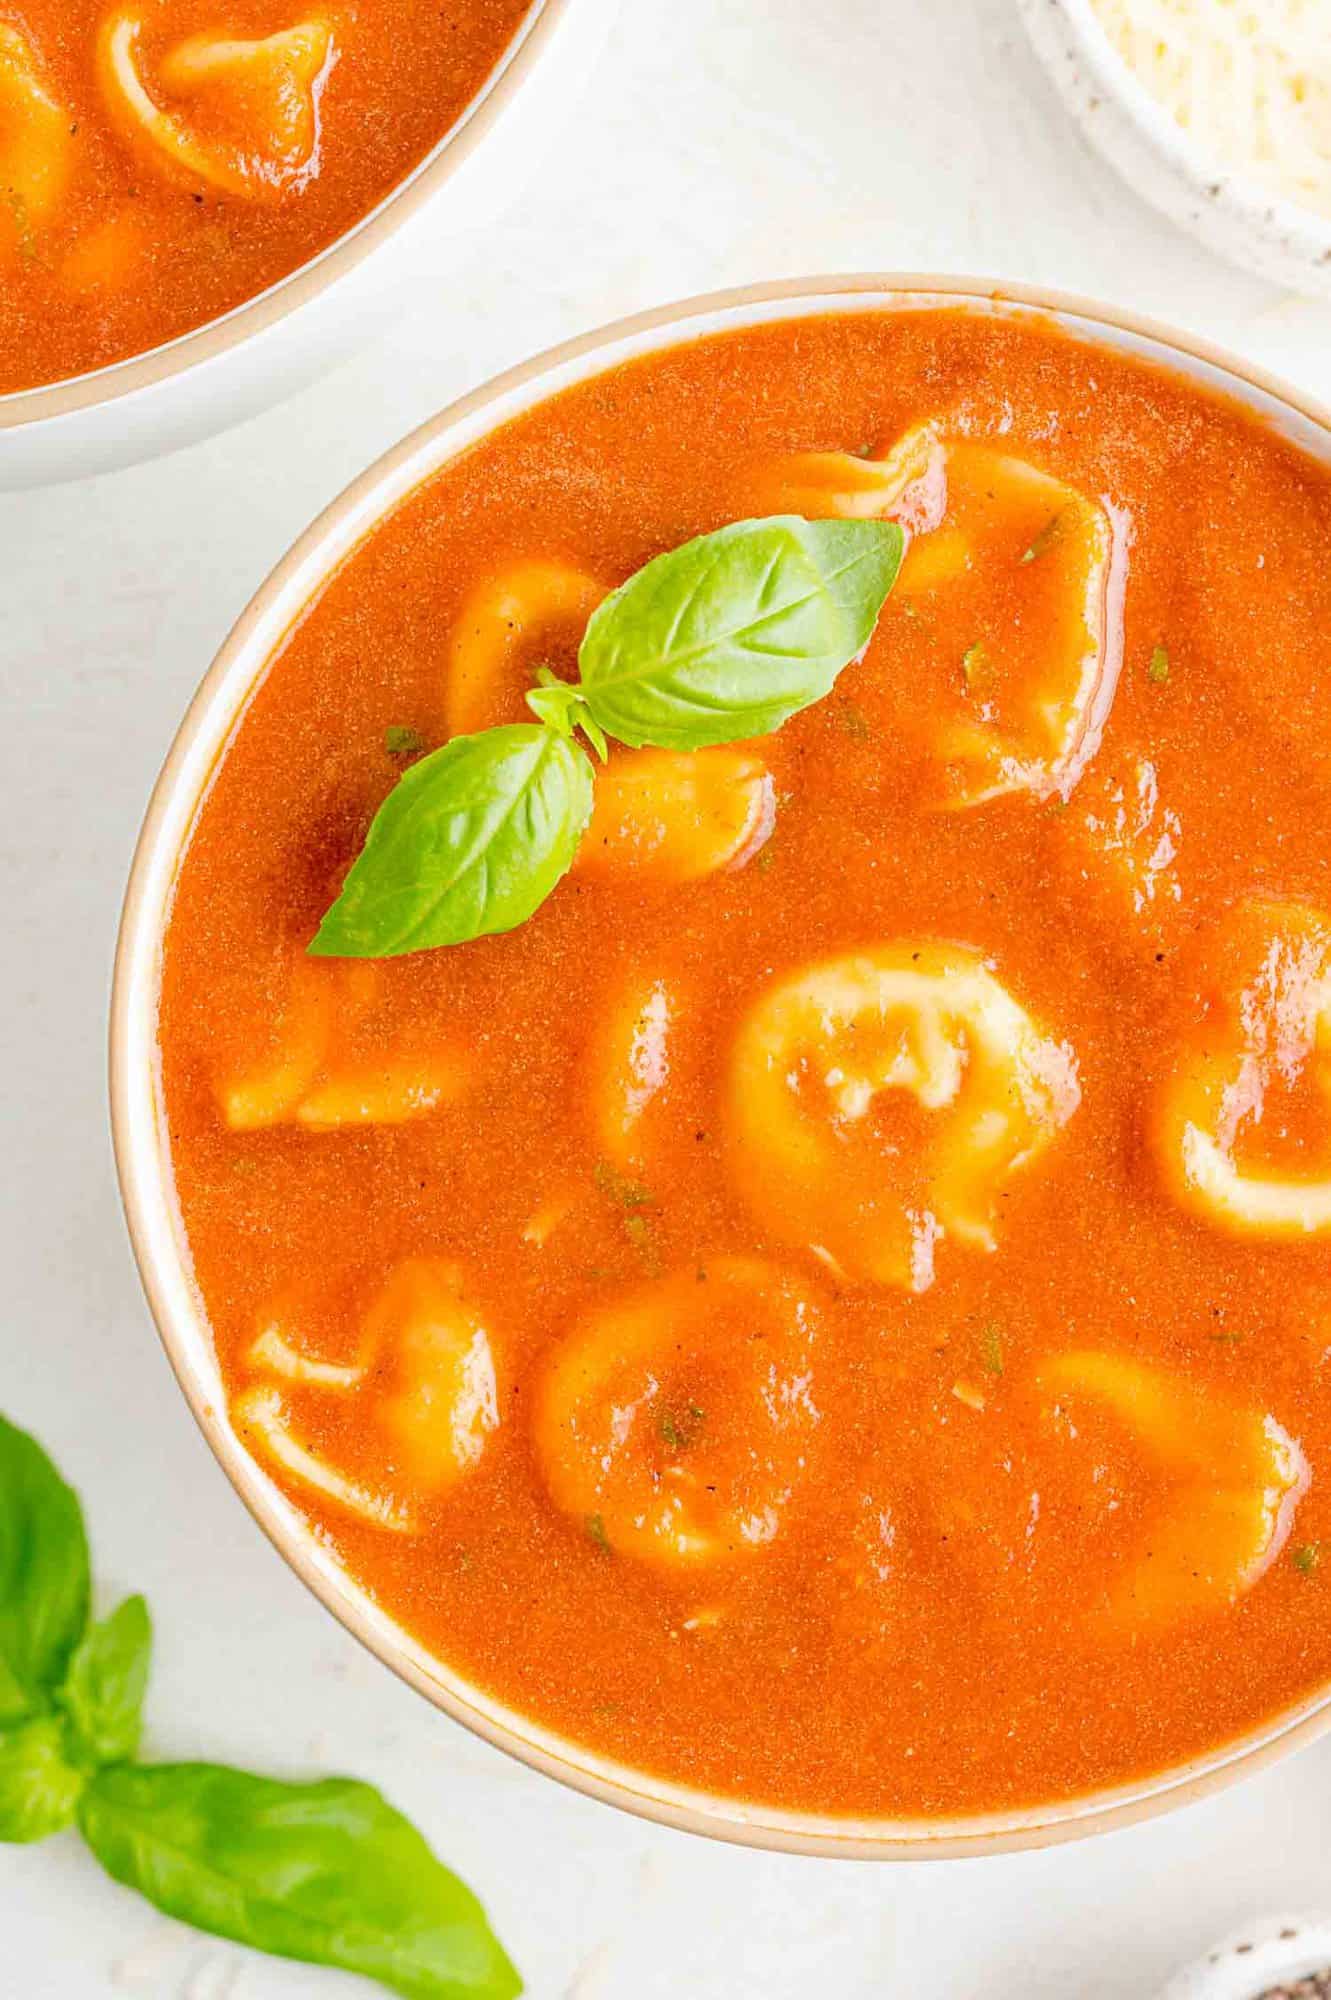 Crockpot tomato soup with tortellini, garnished with fresh basil.